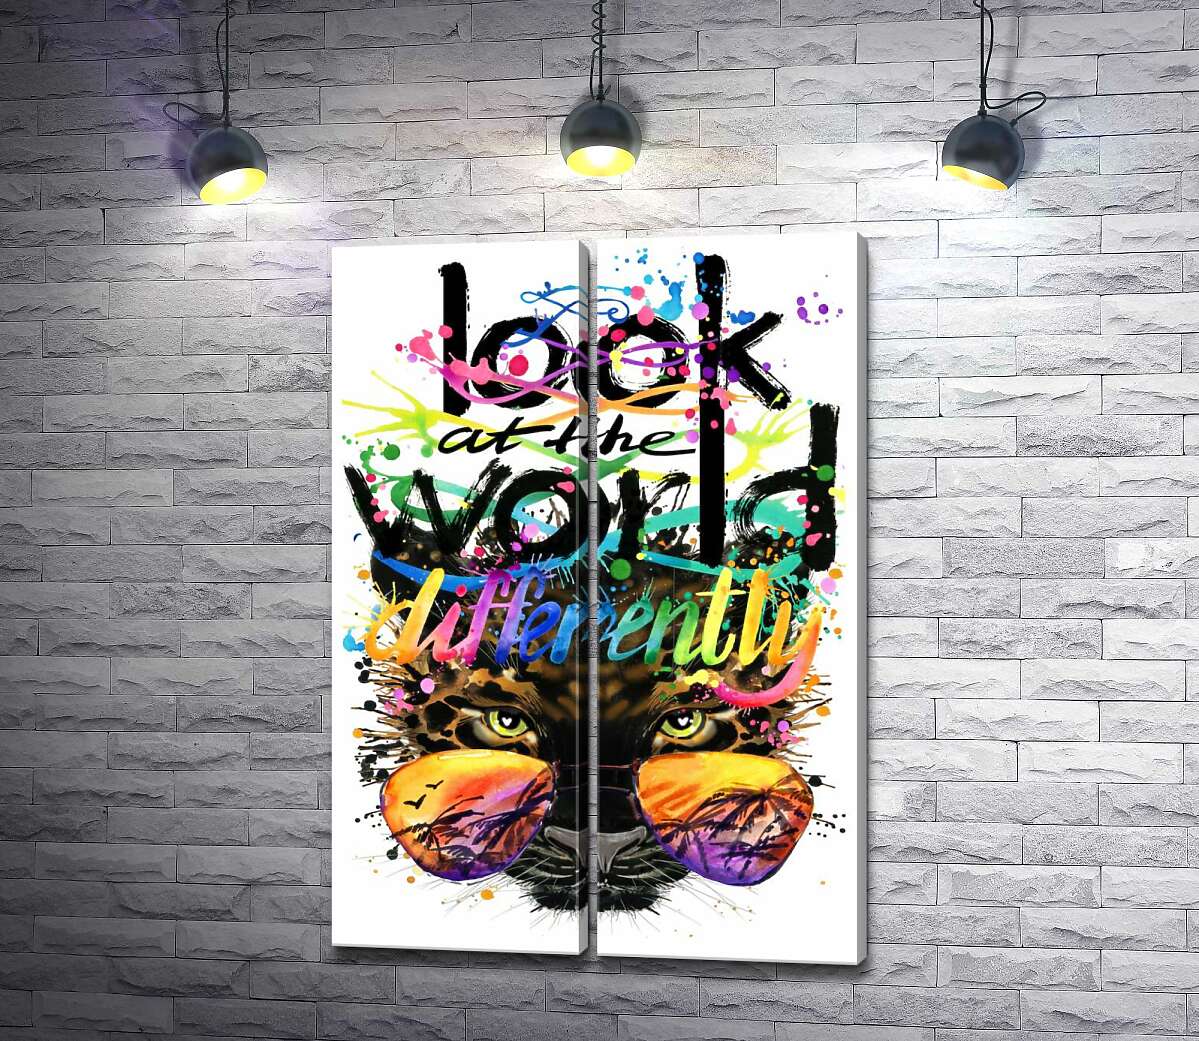 модульная картина Надпись "look at the world differently" на фоне леопарда в очках